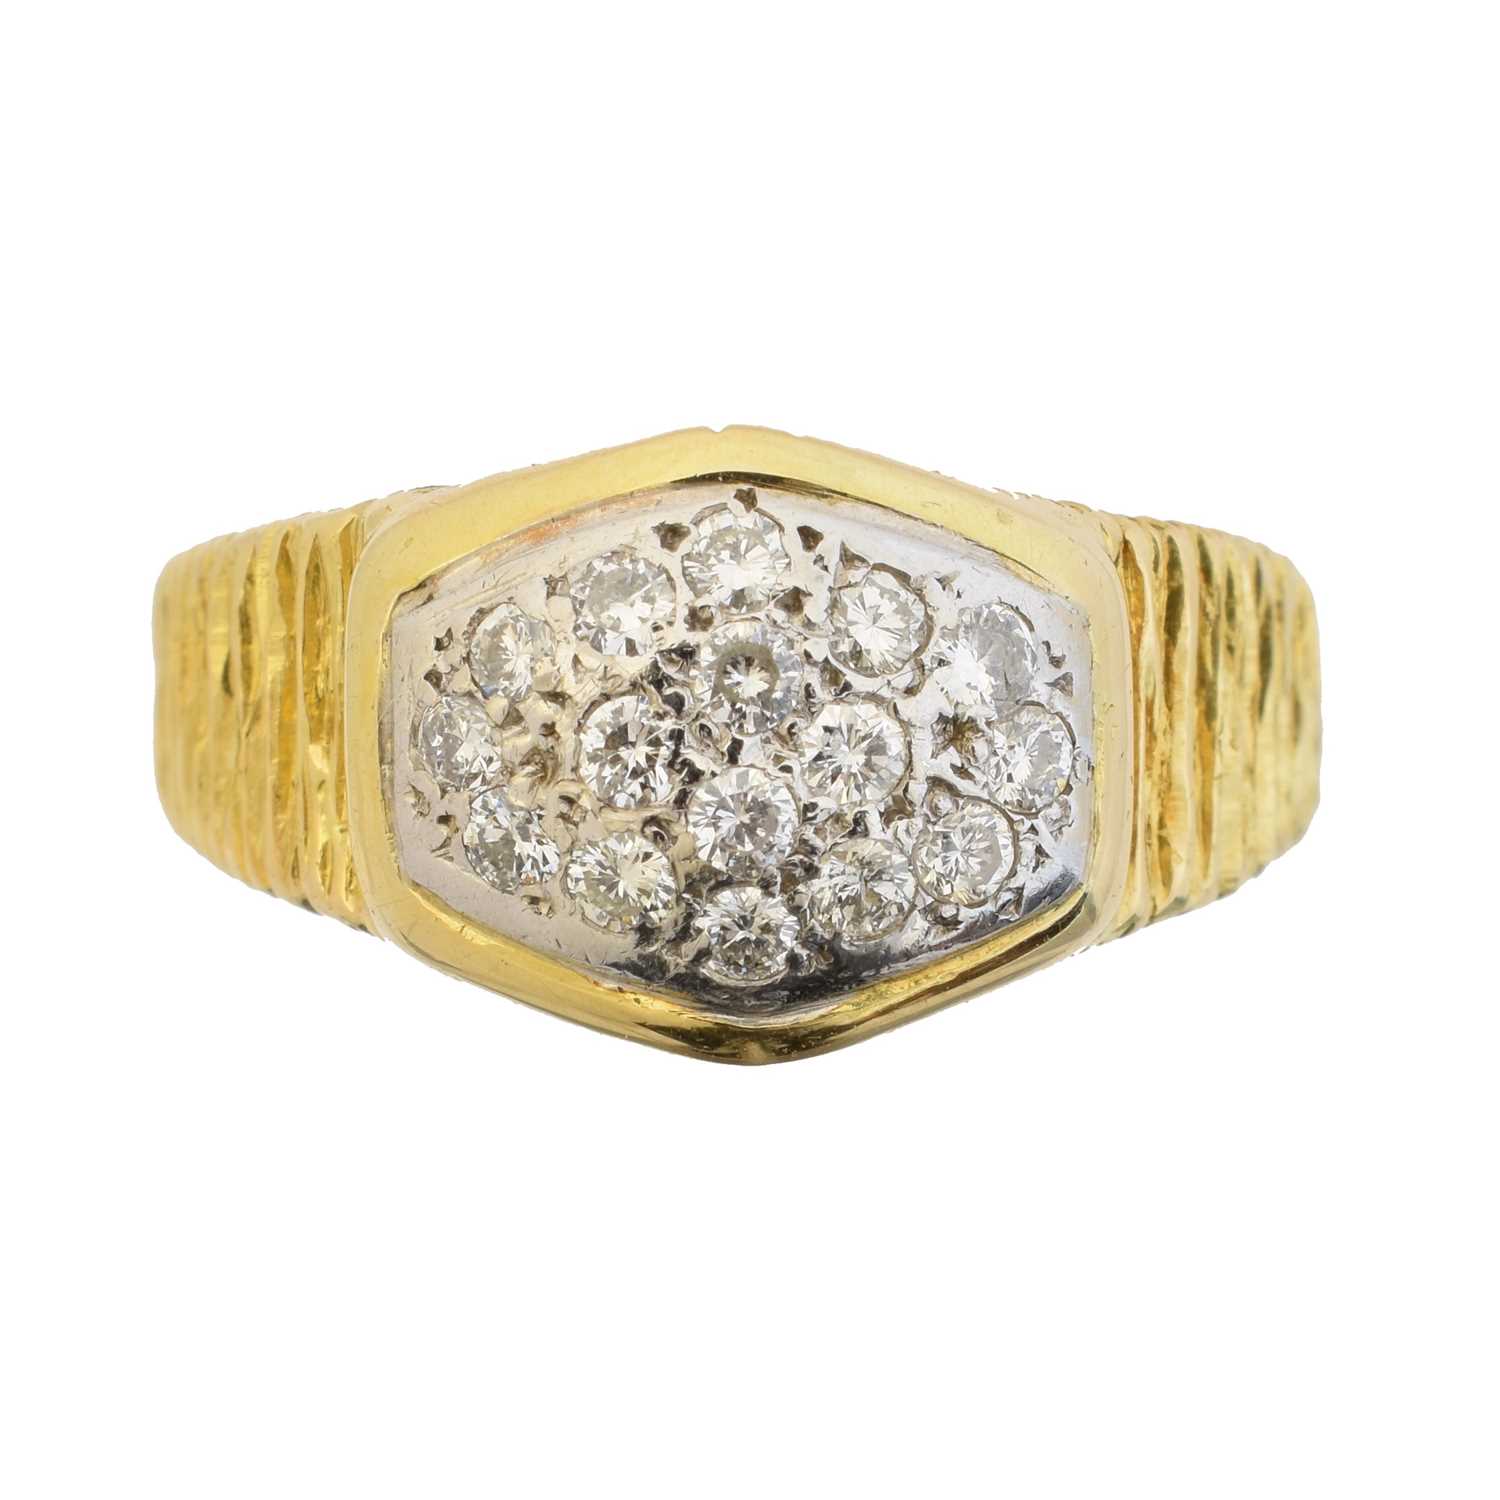 Lot 109 - An 18ct gold diamond dress ring by Cropp & Farr